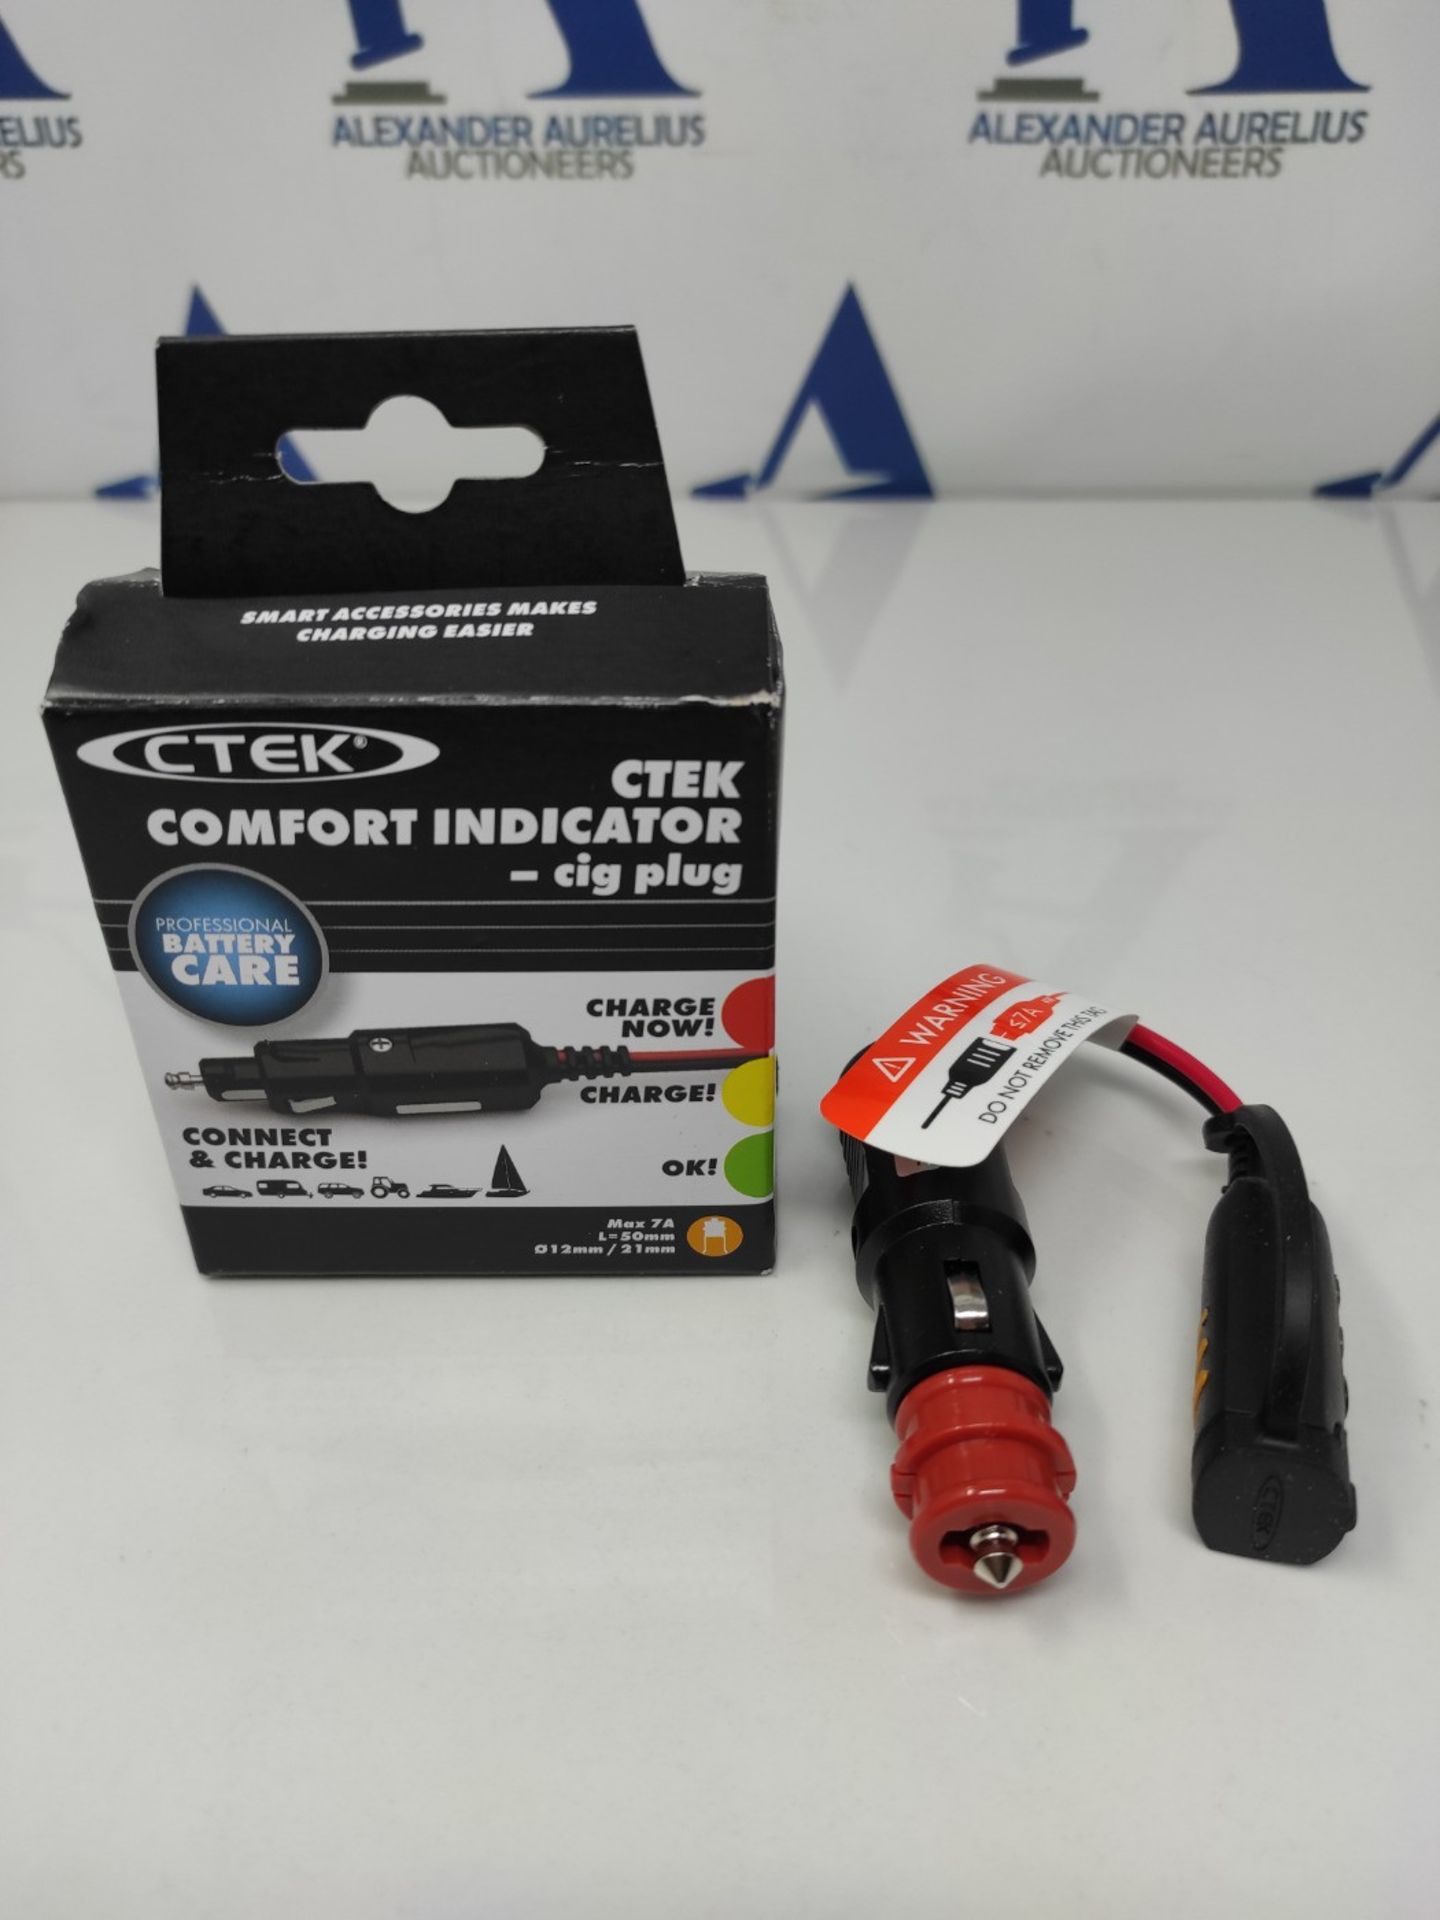 CTEK 56-870 Comfort Indicator Cig Plug - Black - Image 2 of 2